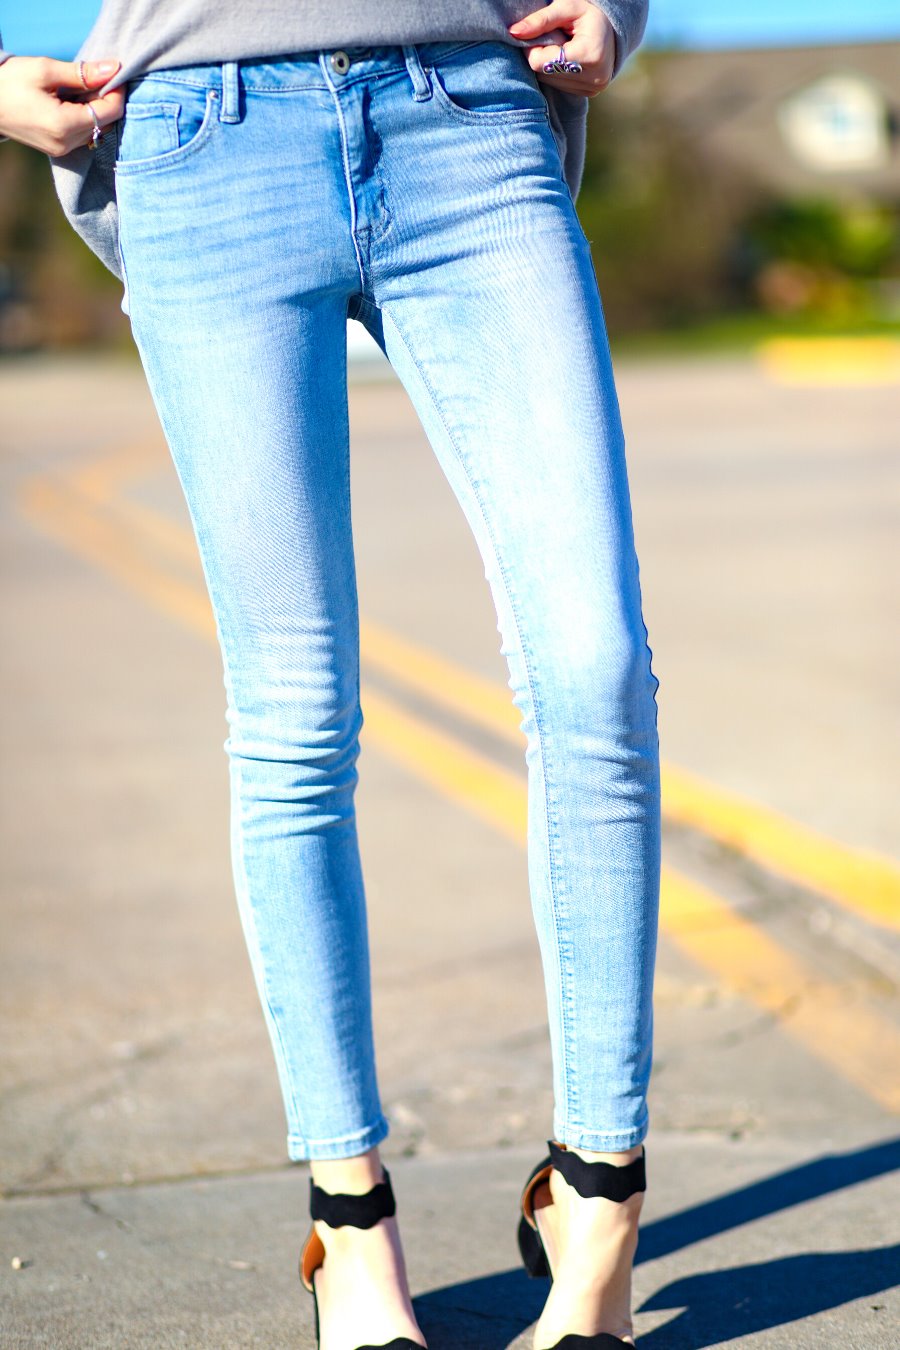 Barbara High-Rise Super Skinny Jean | Premium Italian Fabric